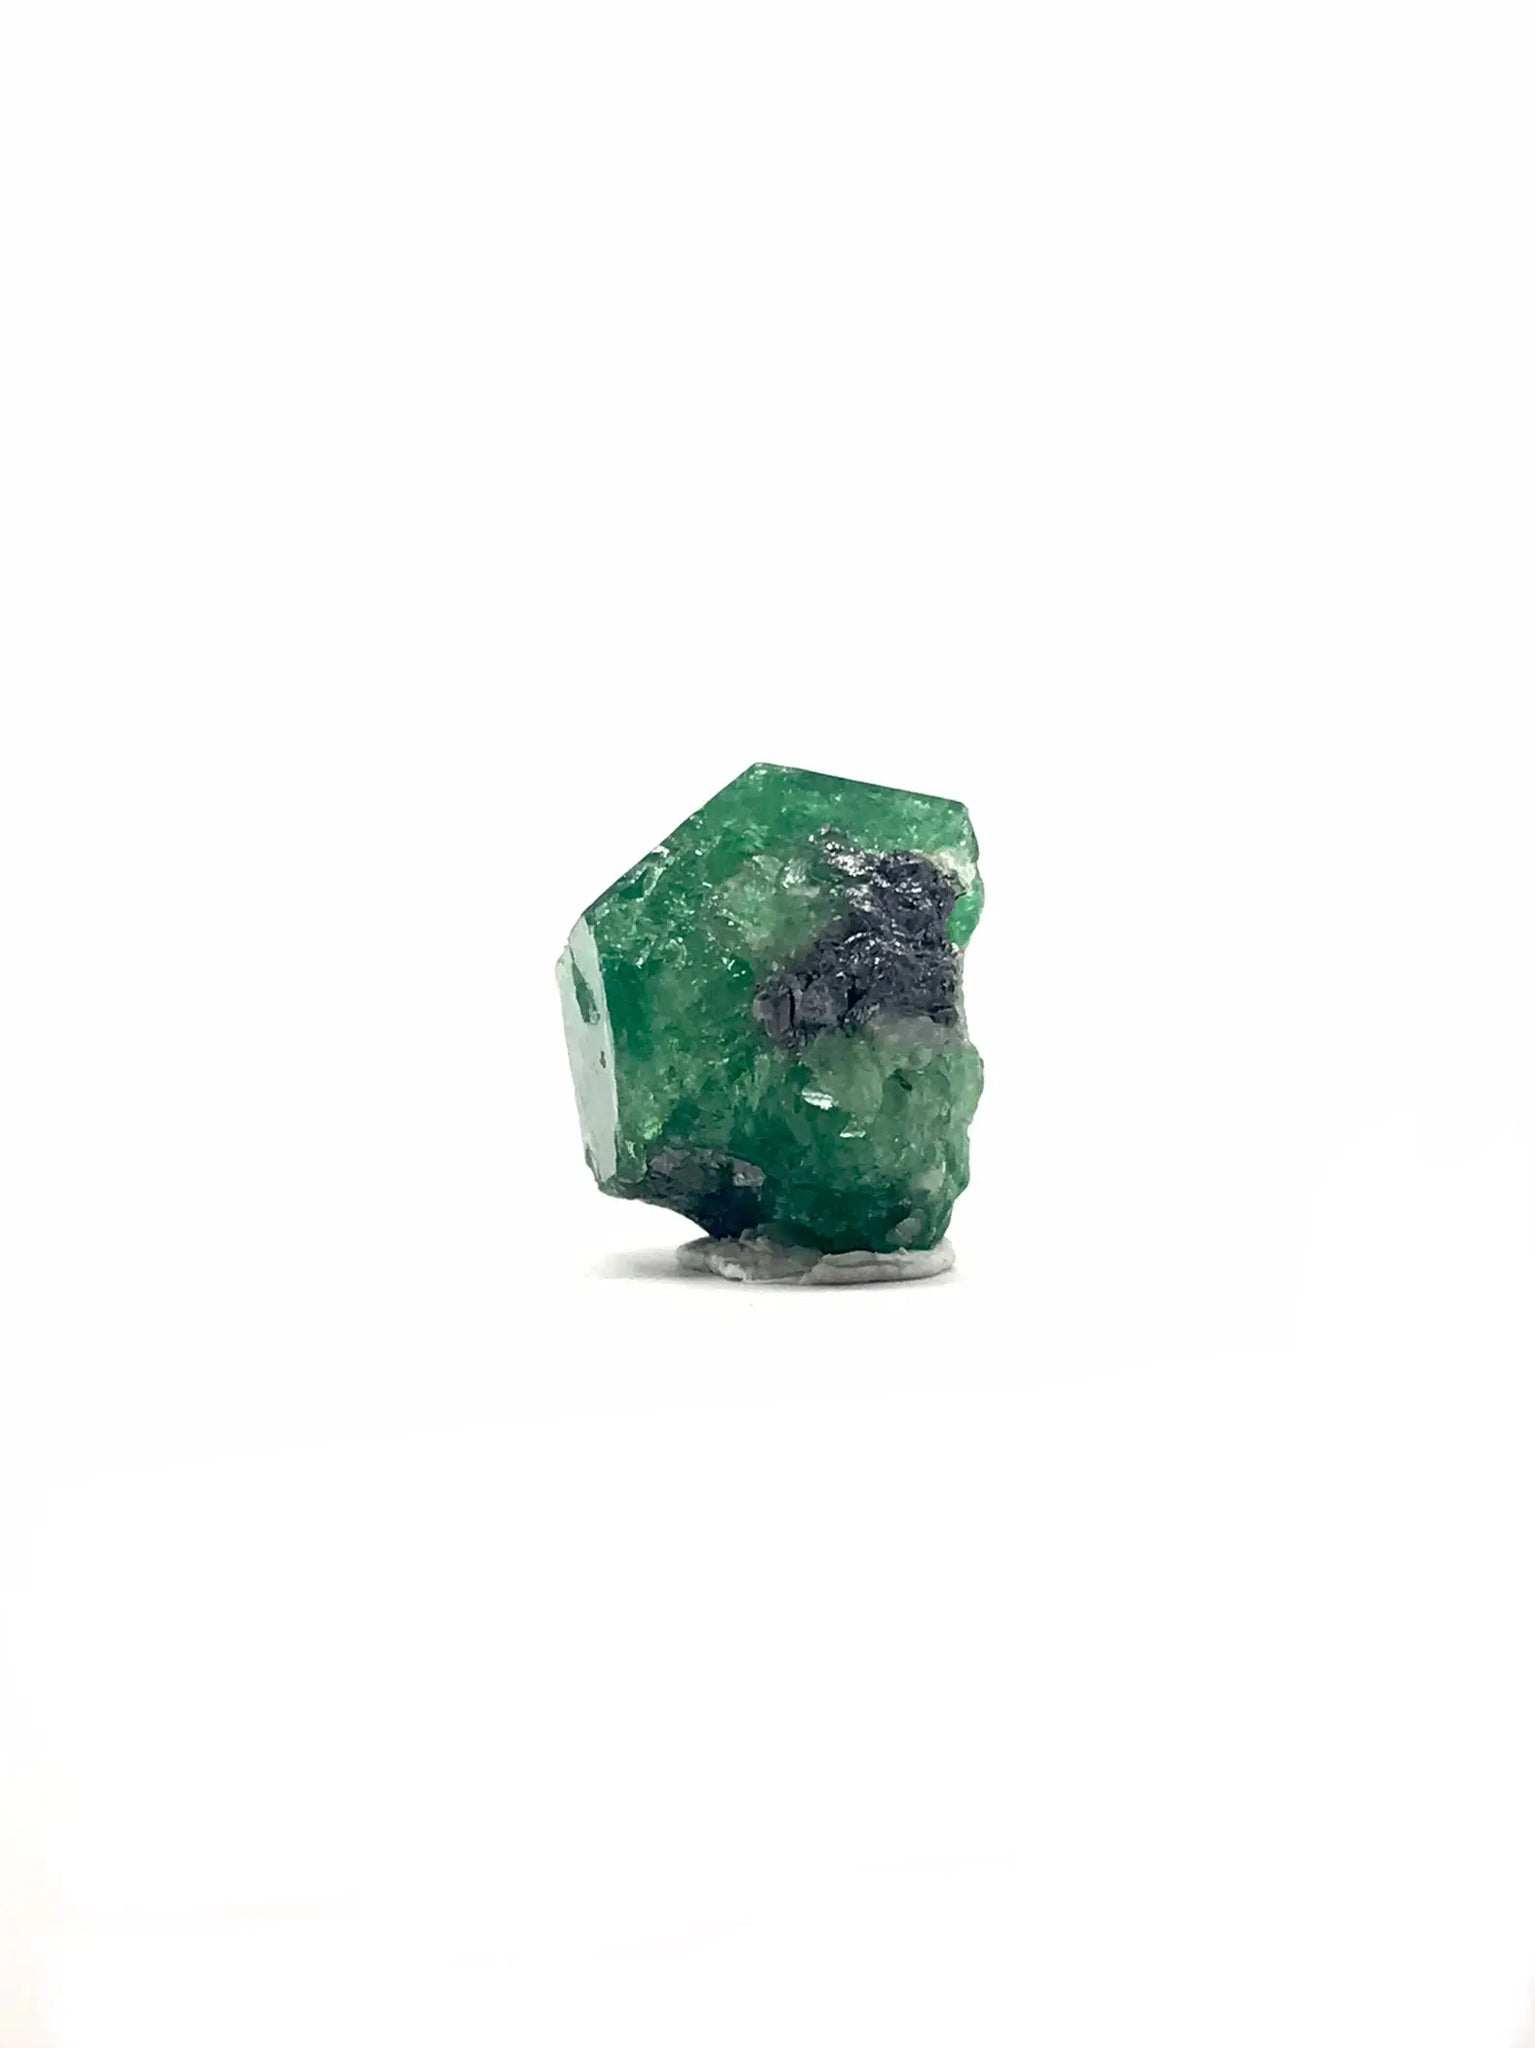 Tarazed Gems & Jewellery - Tsavorite Garnet Crystal (Tanzania)